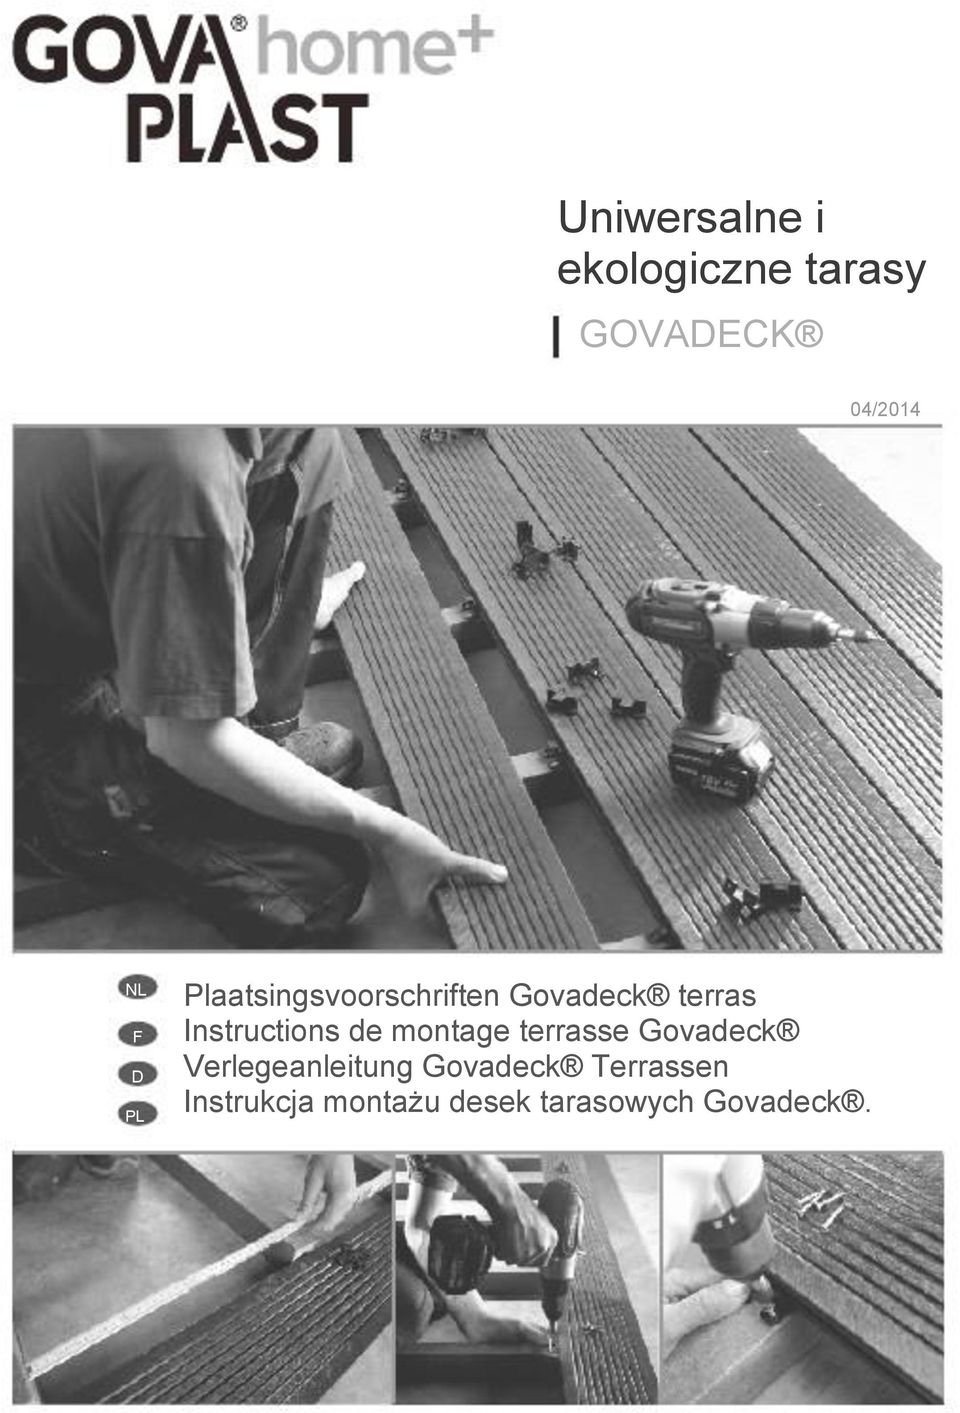 Instructions de montage terrasse Govadeck